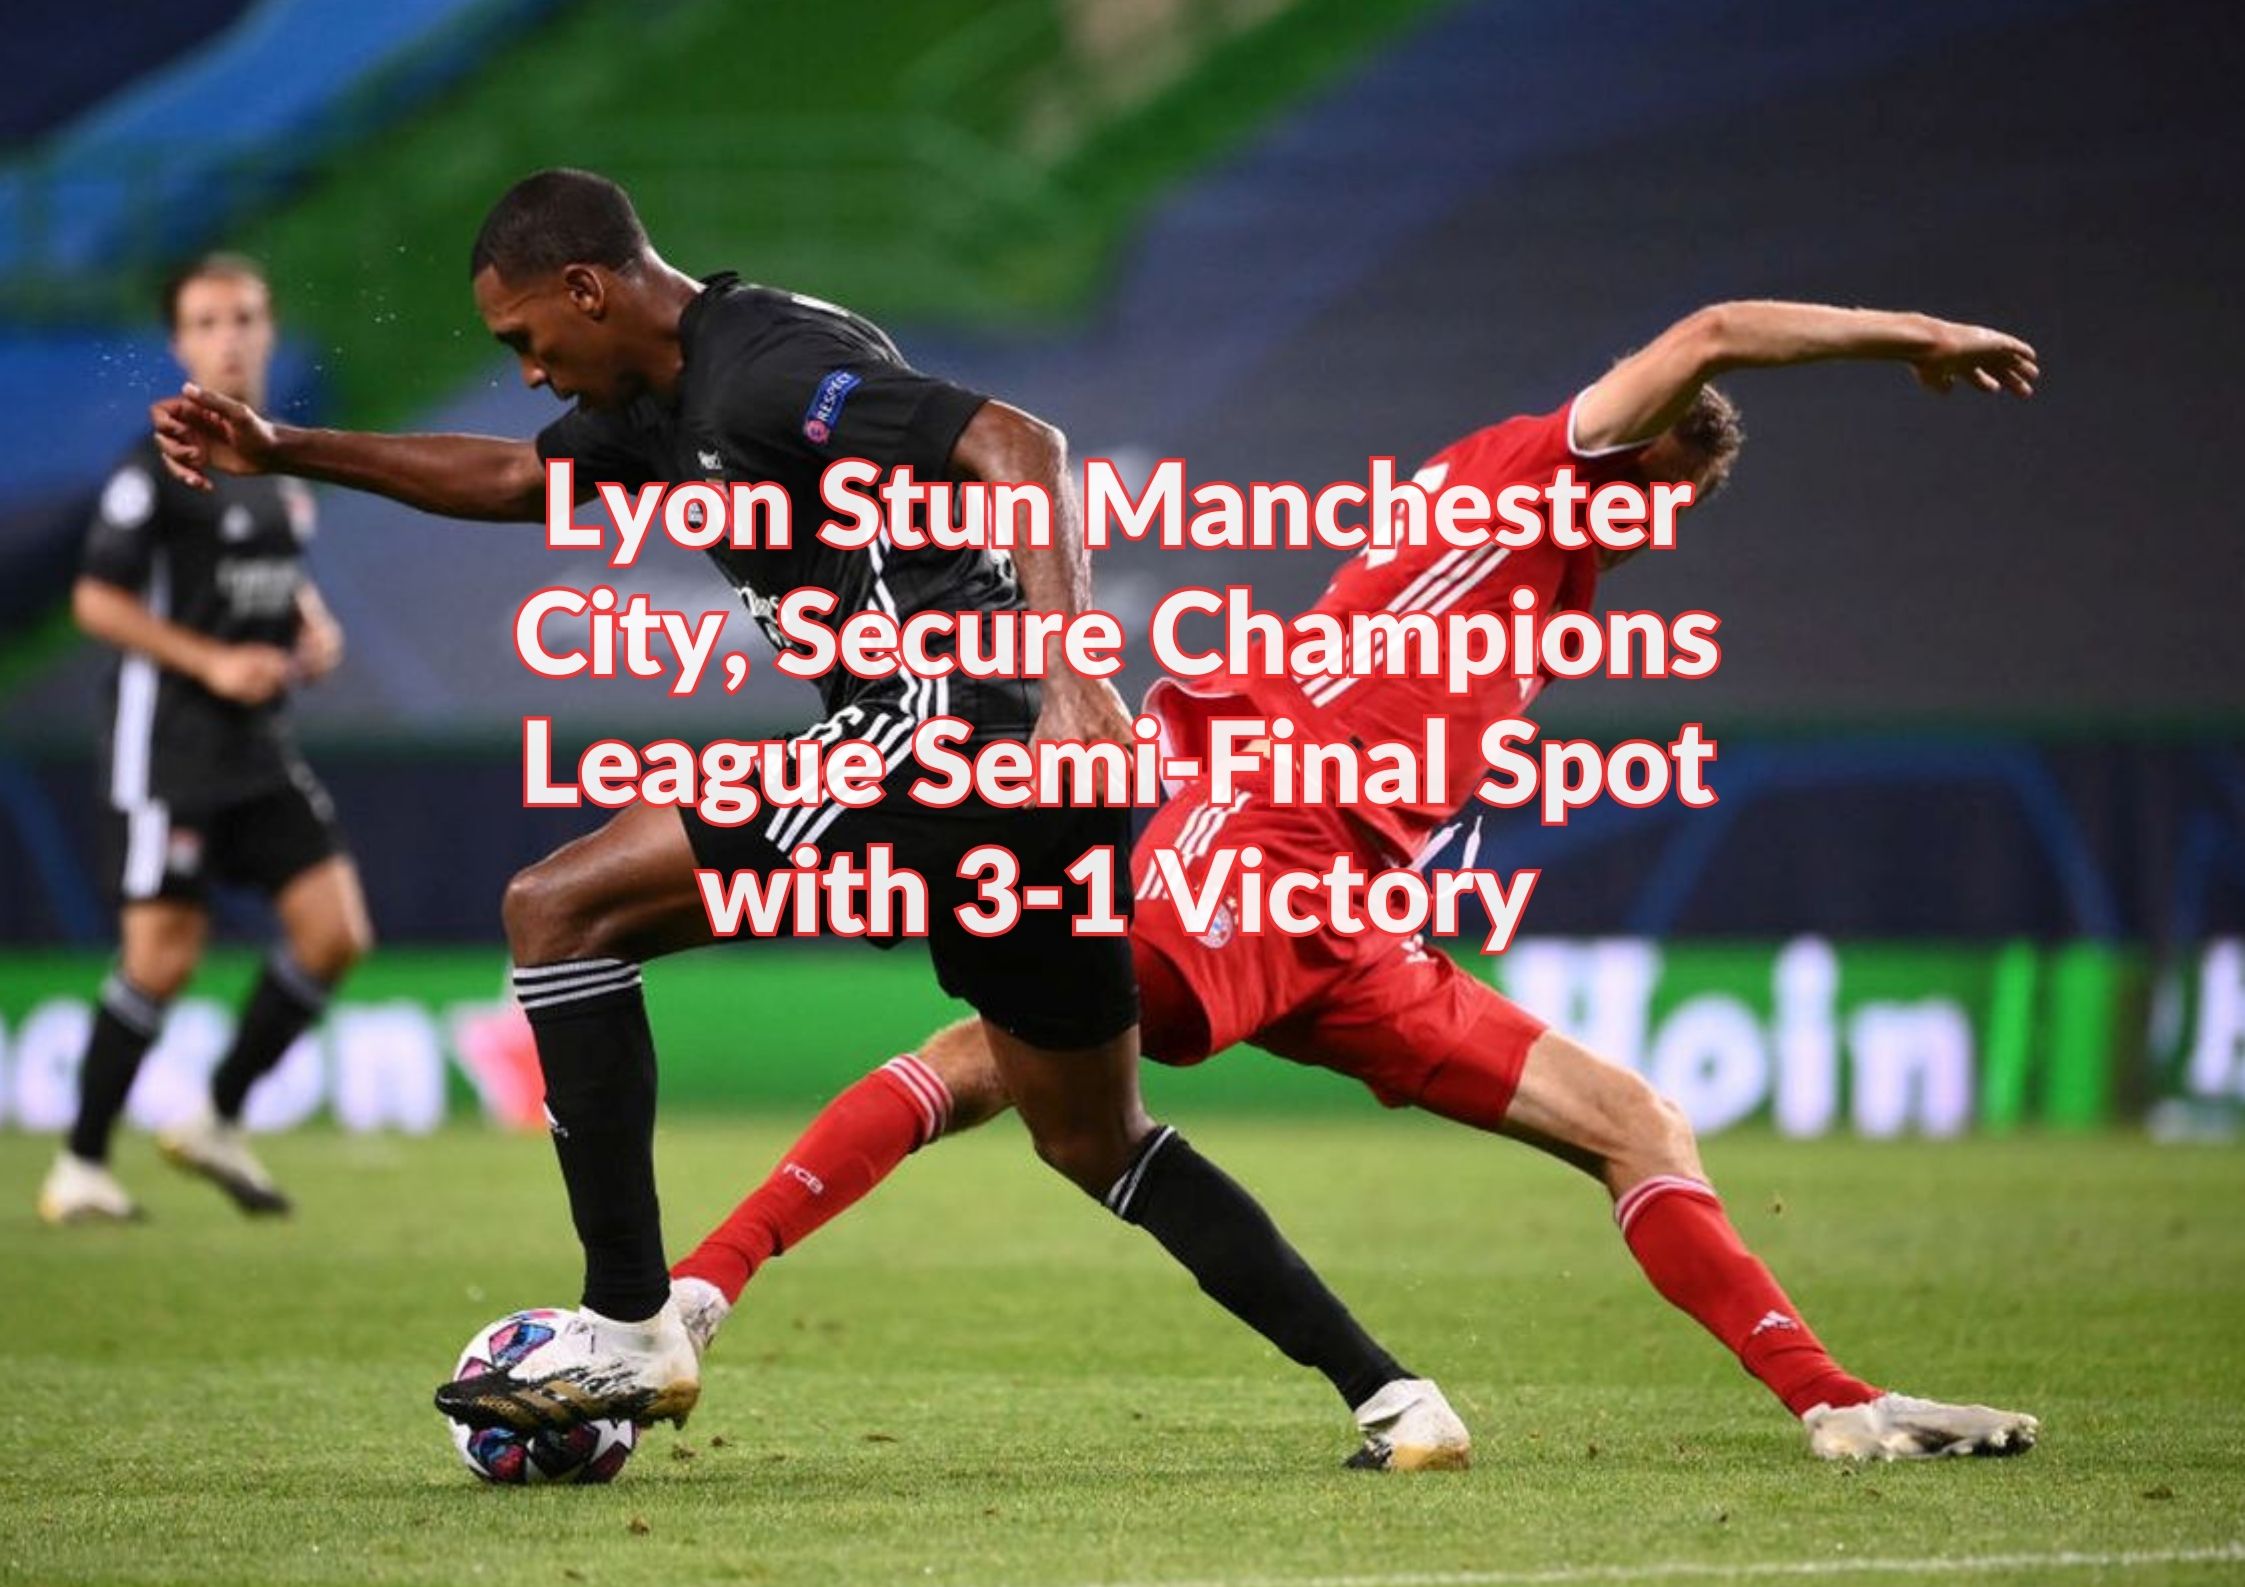 Lyon Stun Manchester City, Secure Champions League Semi-Final Spot with 3-1 Victory